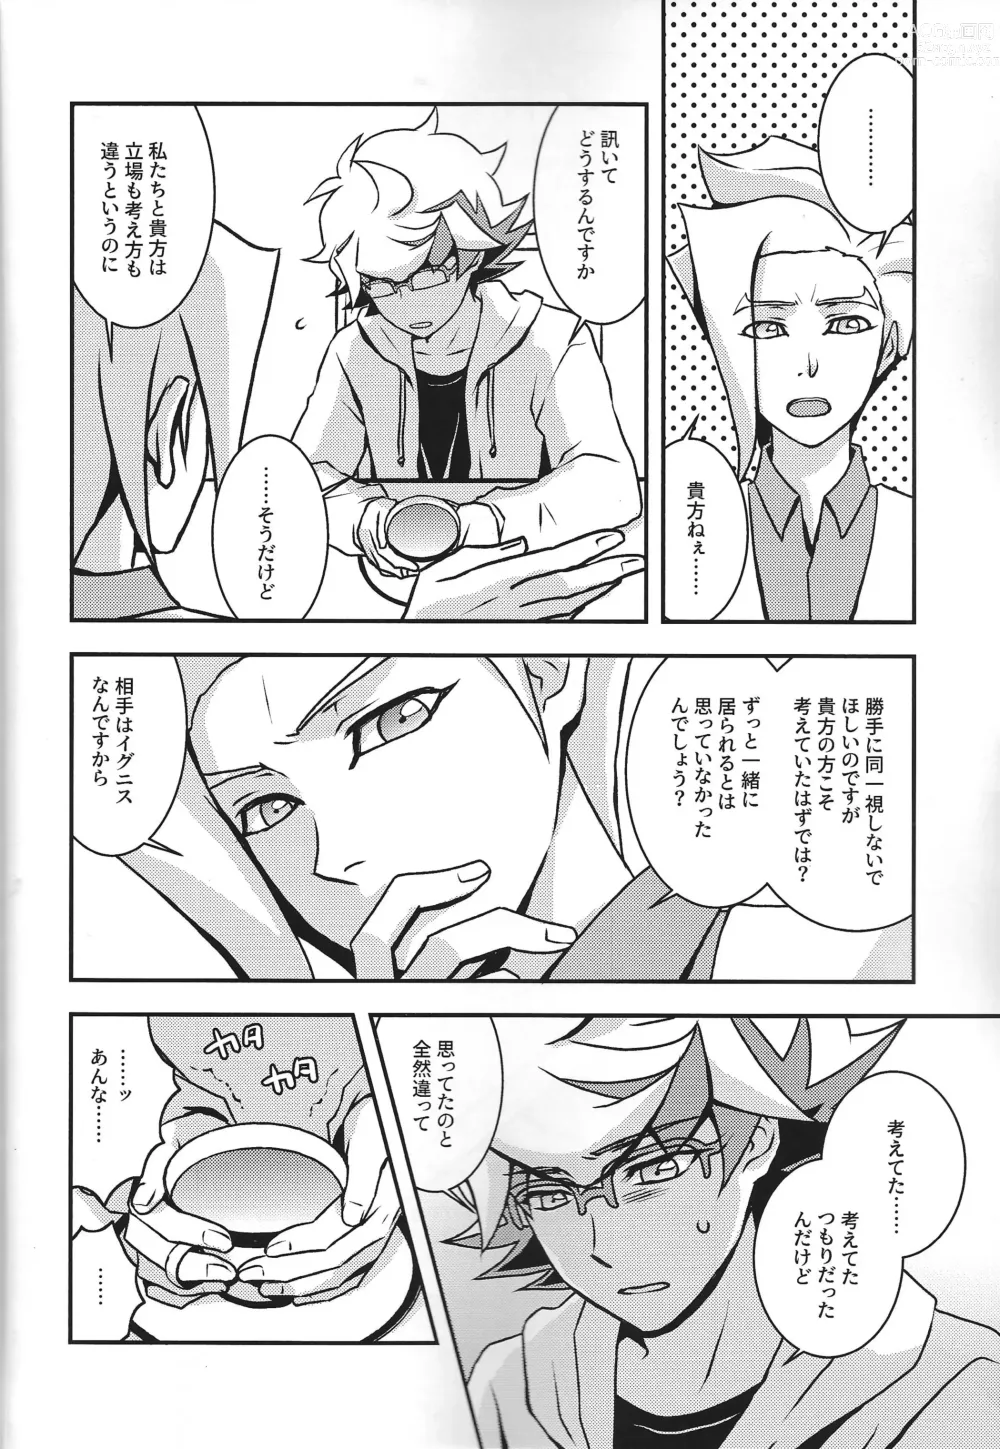 Page 33 of doujinshi Na o Yobu Koe